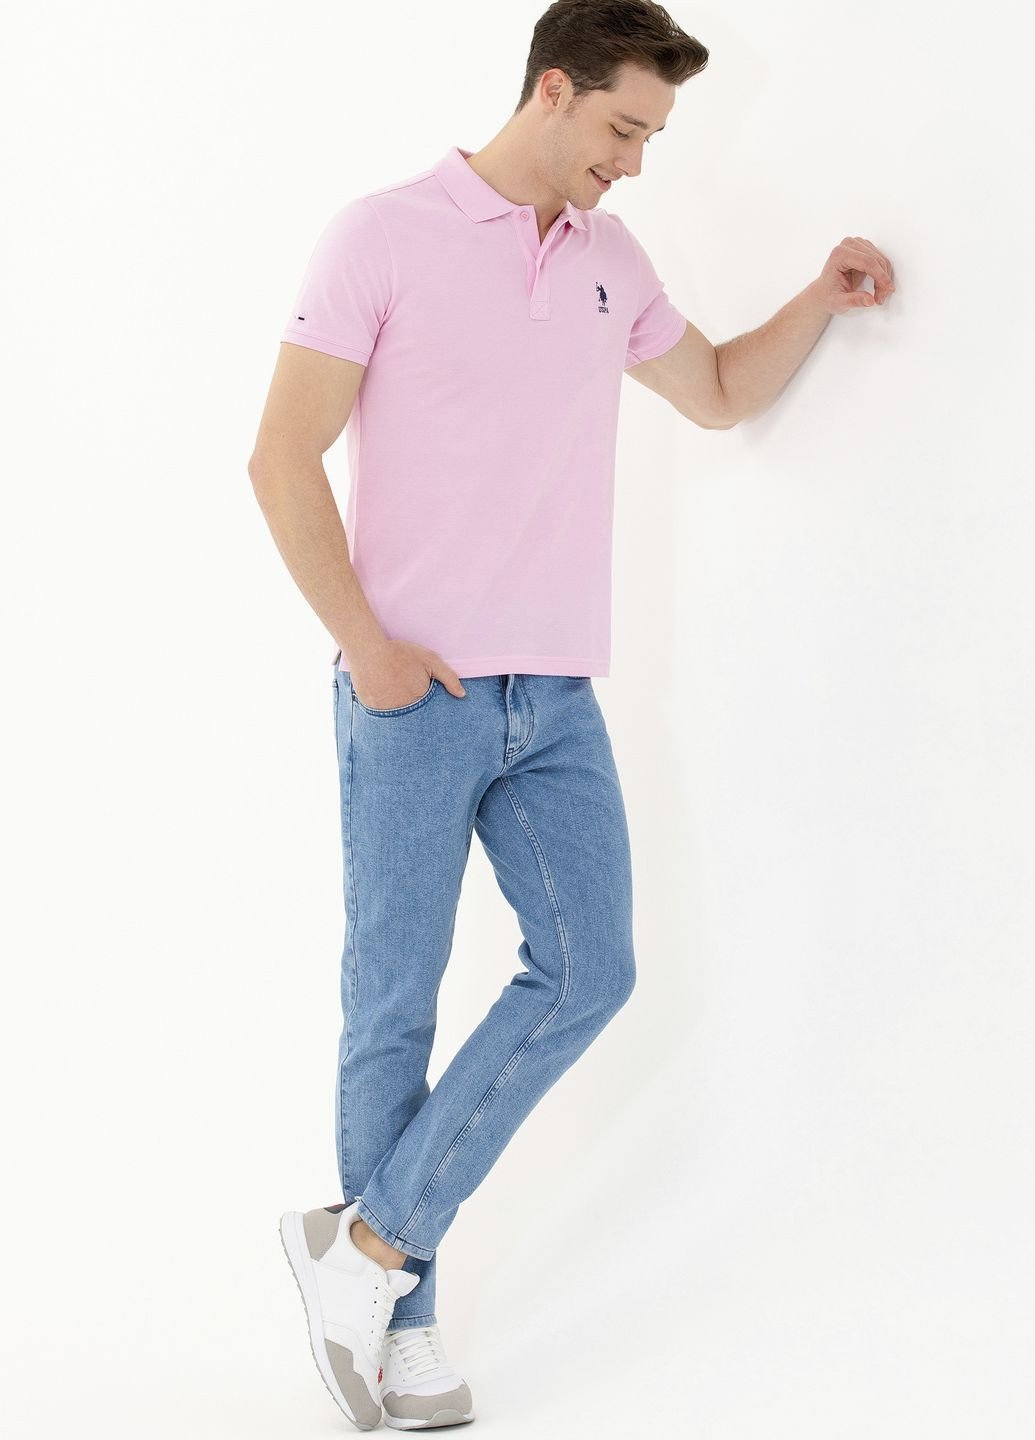 Светло-розовая футболка поло мужское U.S. Polo Assn.